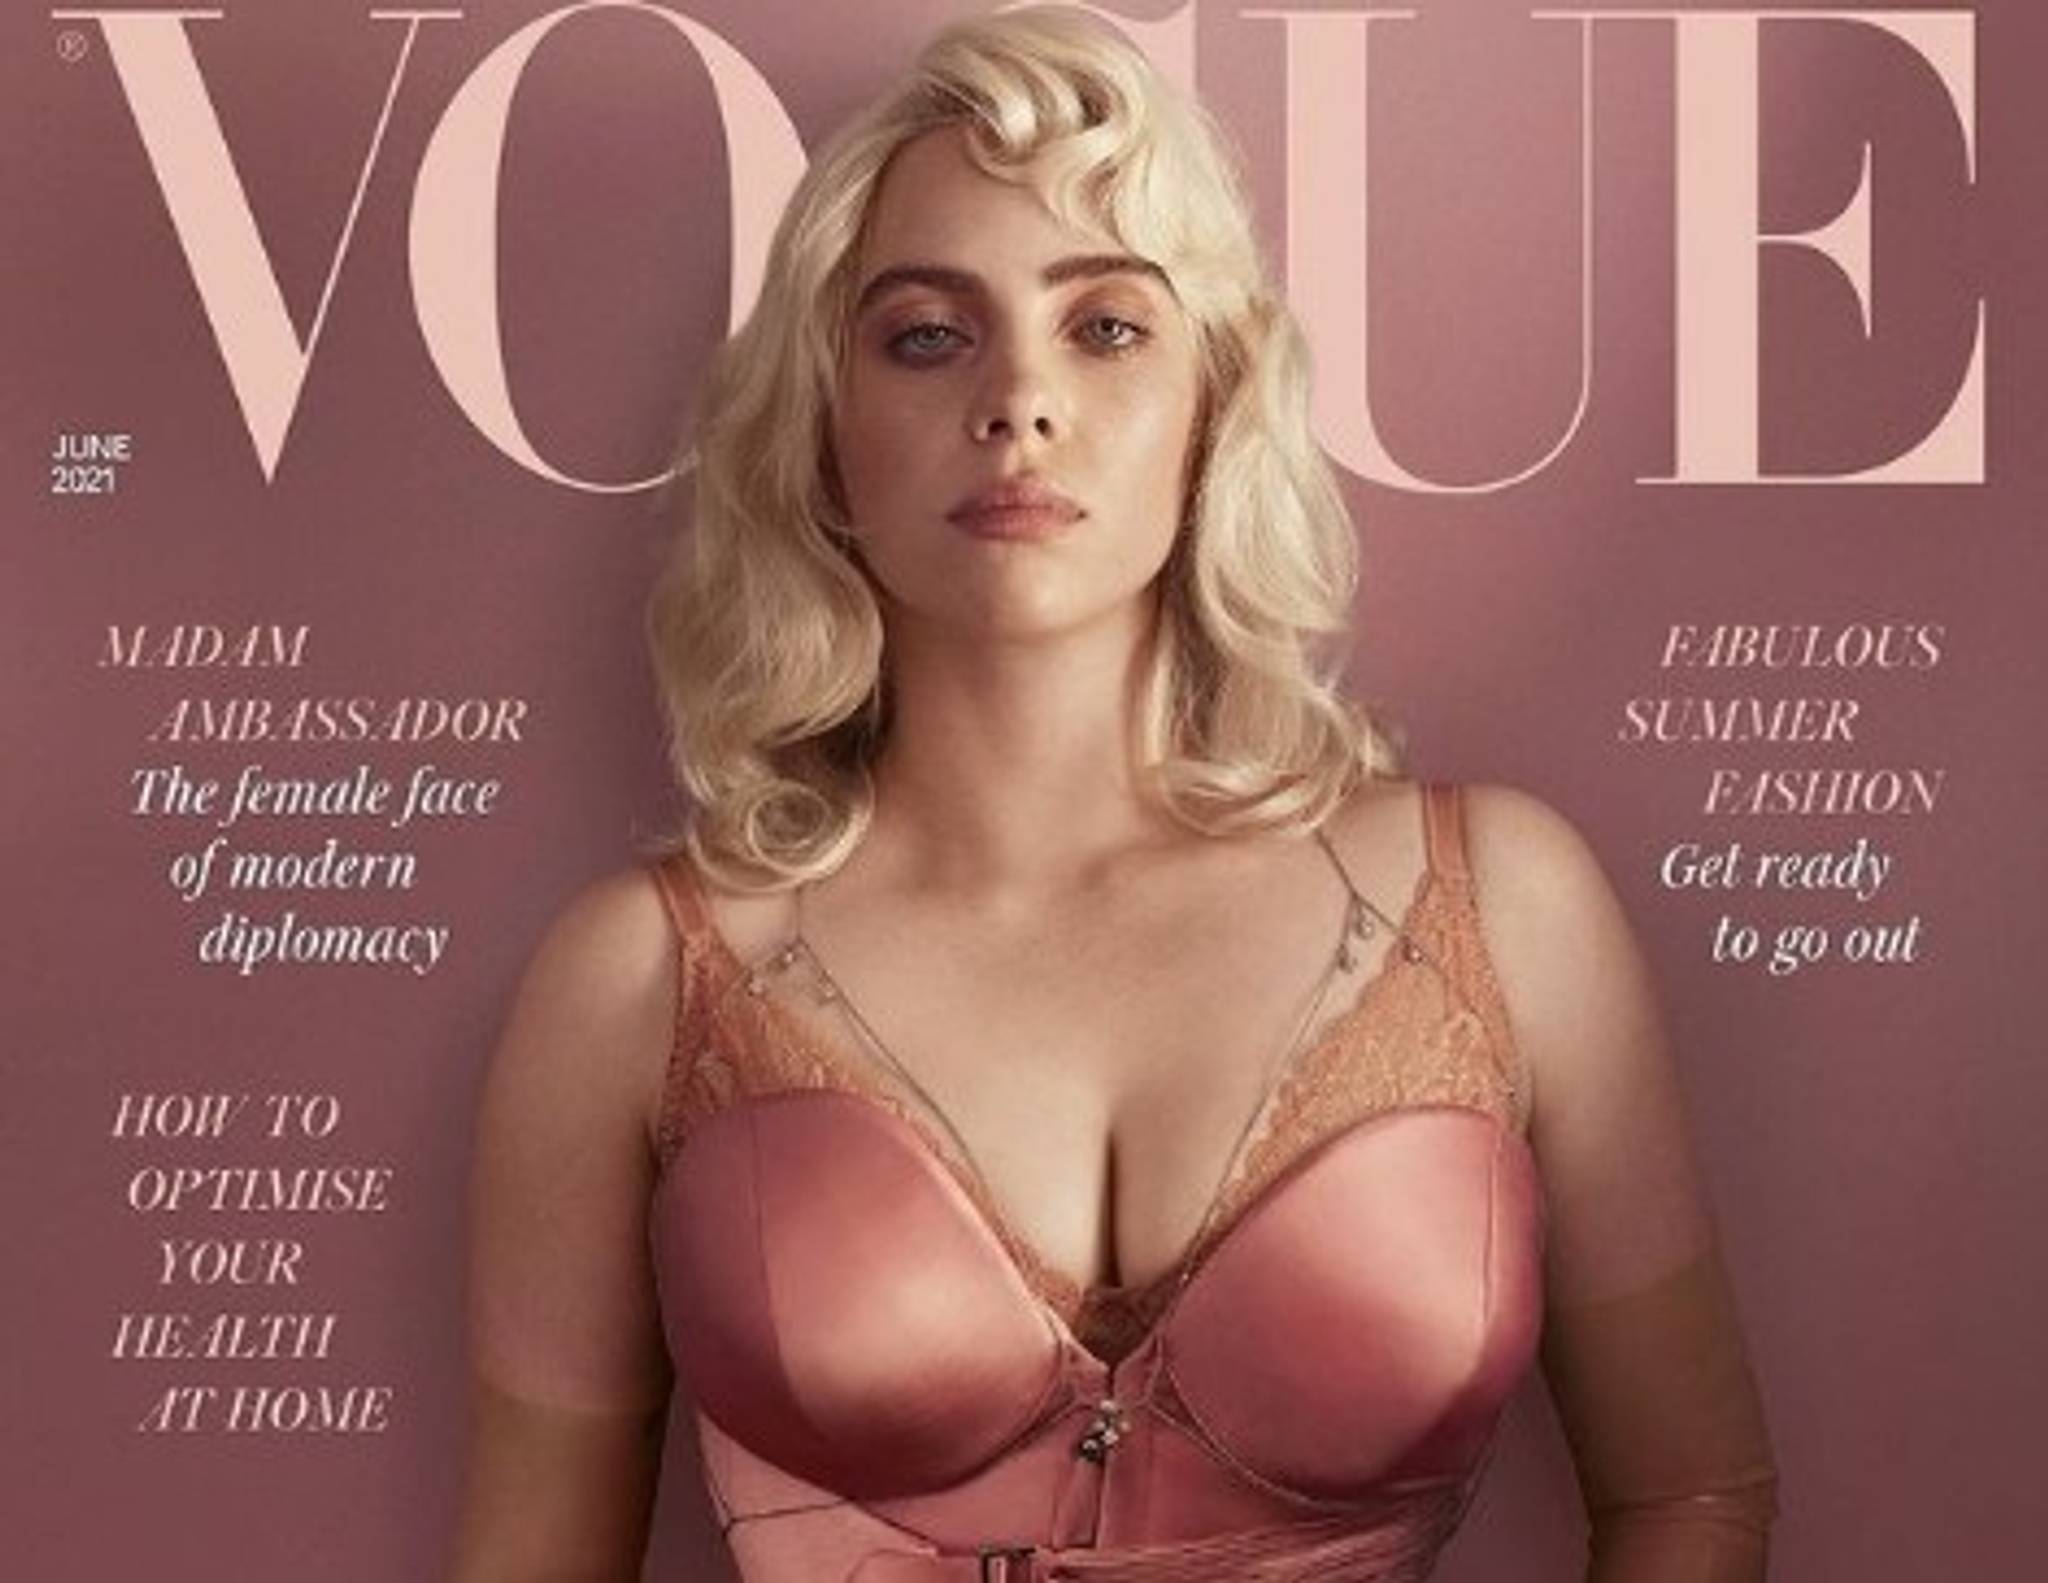 Billie Eilish's 'Vogue' cover pushes female empowerment